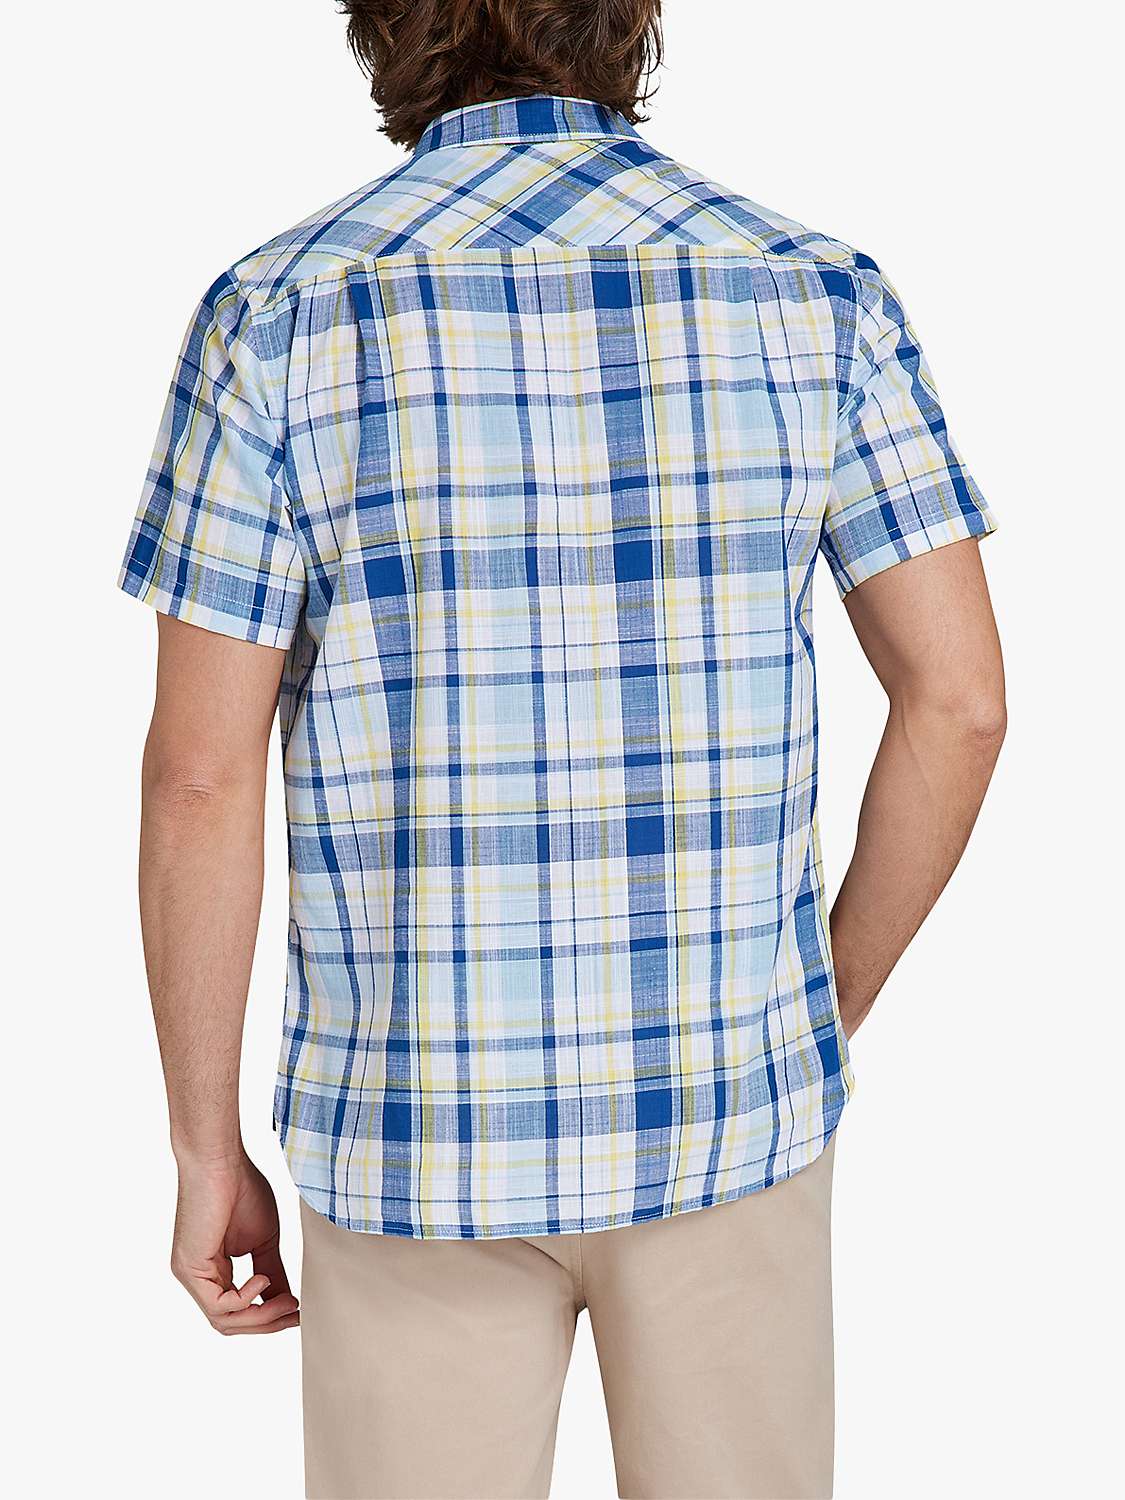 Buy Raging Bull Short Sleeve Madras Check Linen Look Shirt, Sky Blue/Multi Online at johnlewis.com